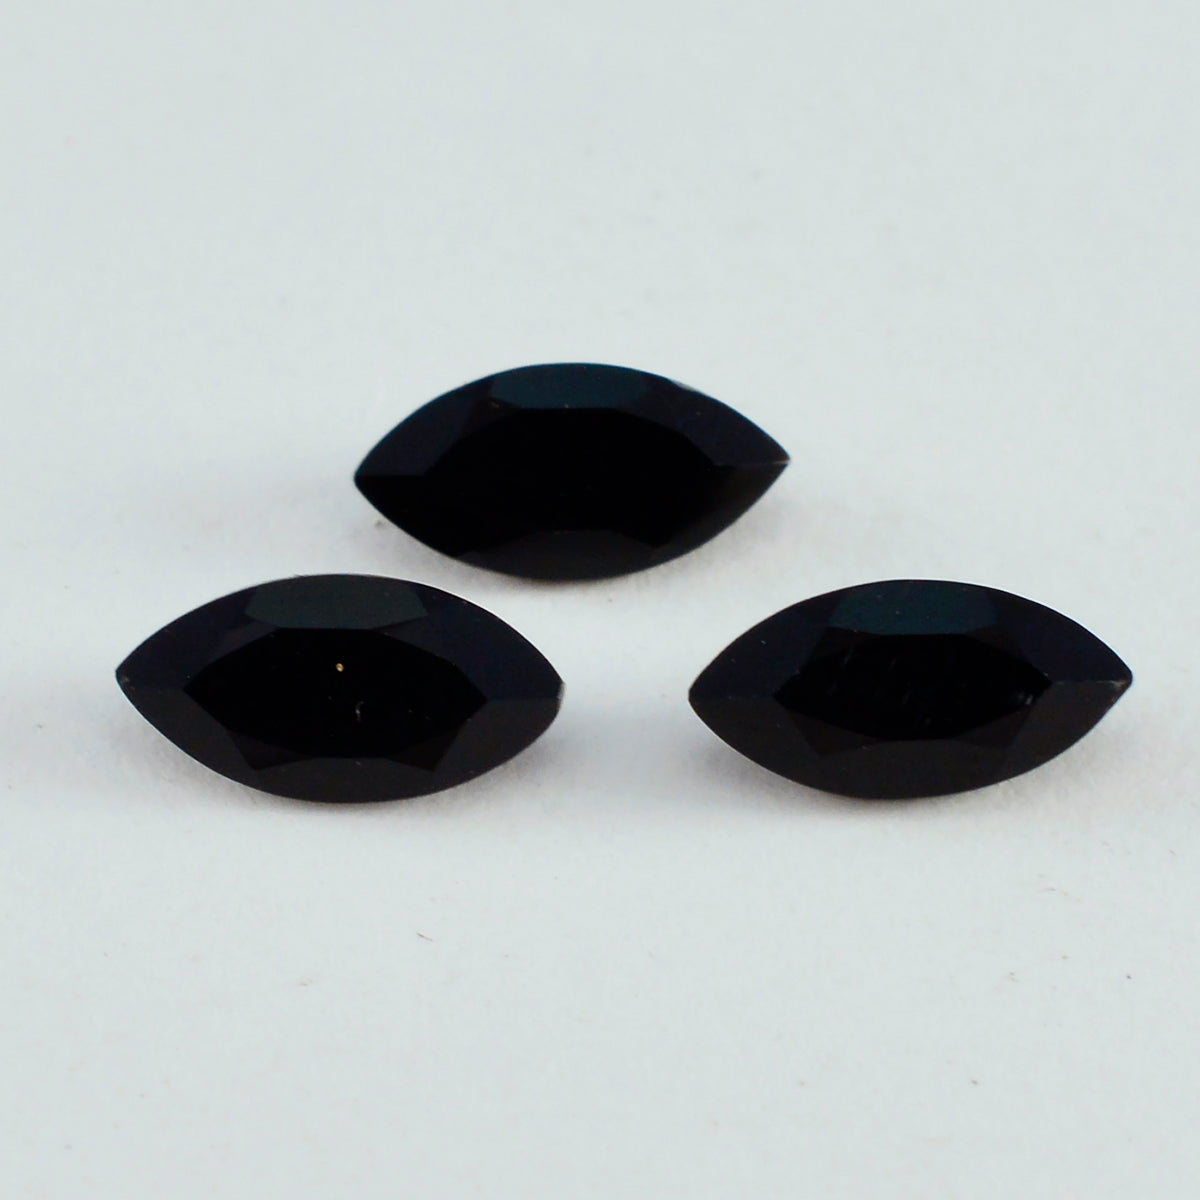 Riyogems 1PC Natural Black Onyx Faceted 11x22 mm Marquise Shape astonishing Quality Stone